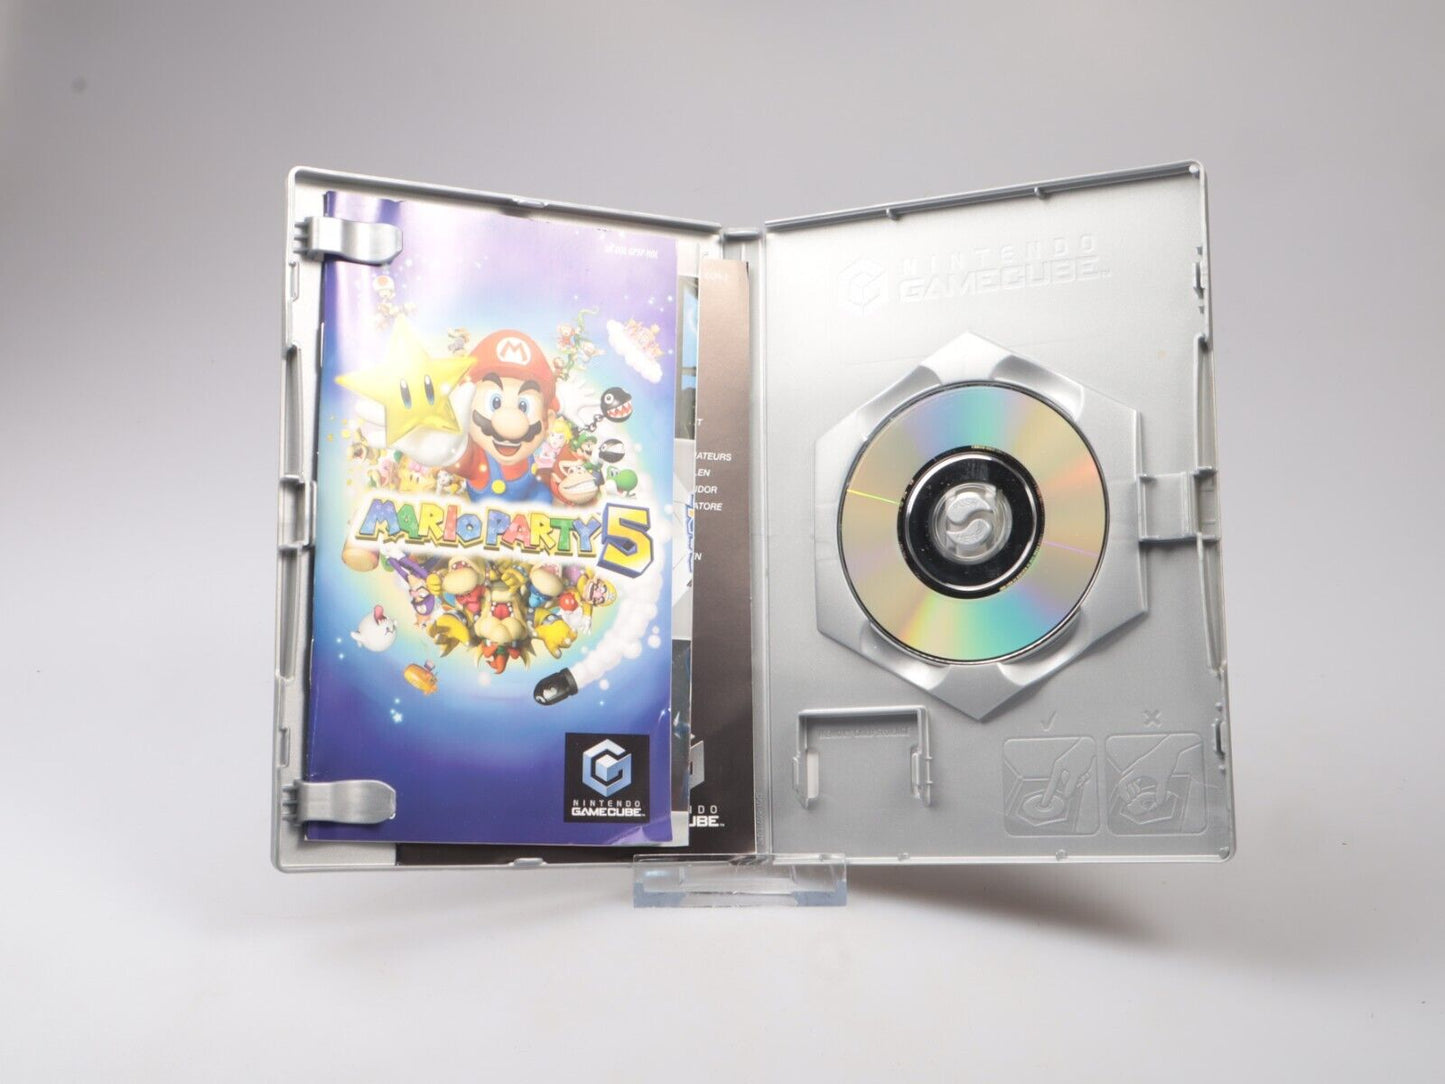 GameCube | Mario Party 5 PC (HOL) (PAL) 